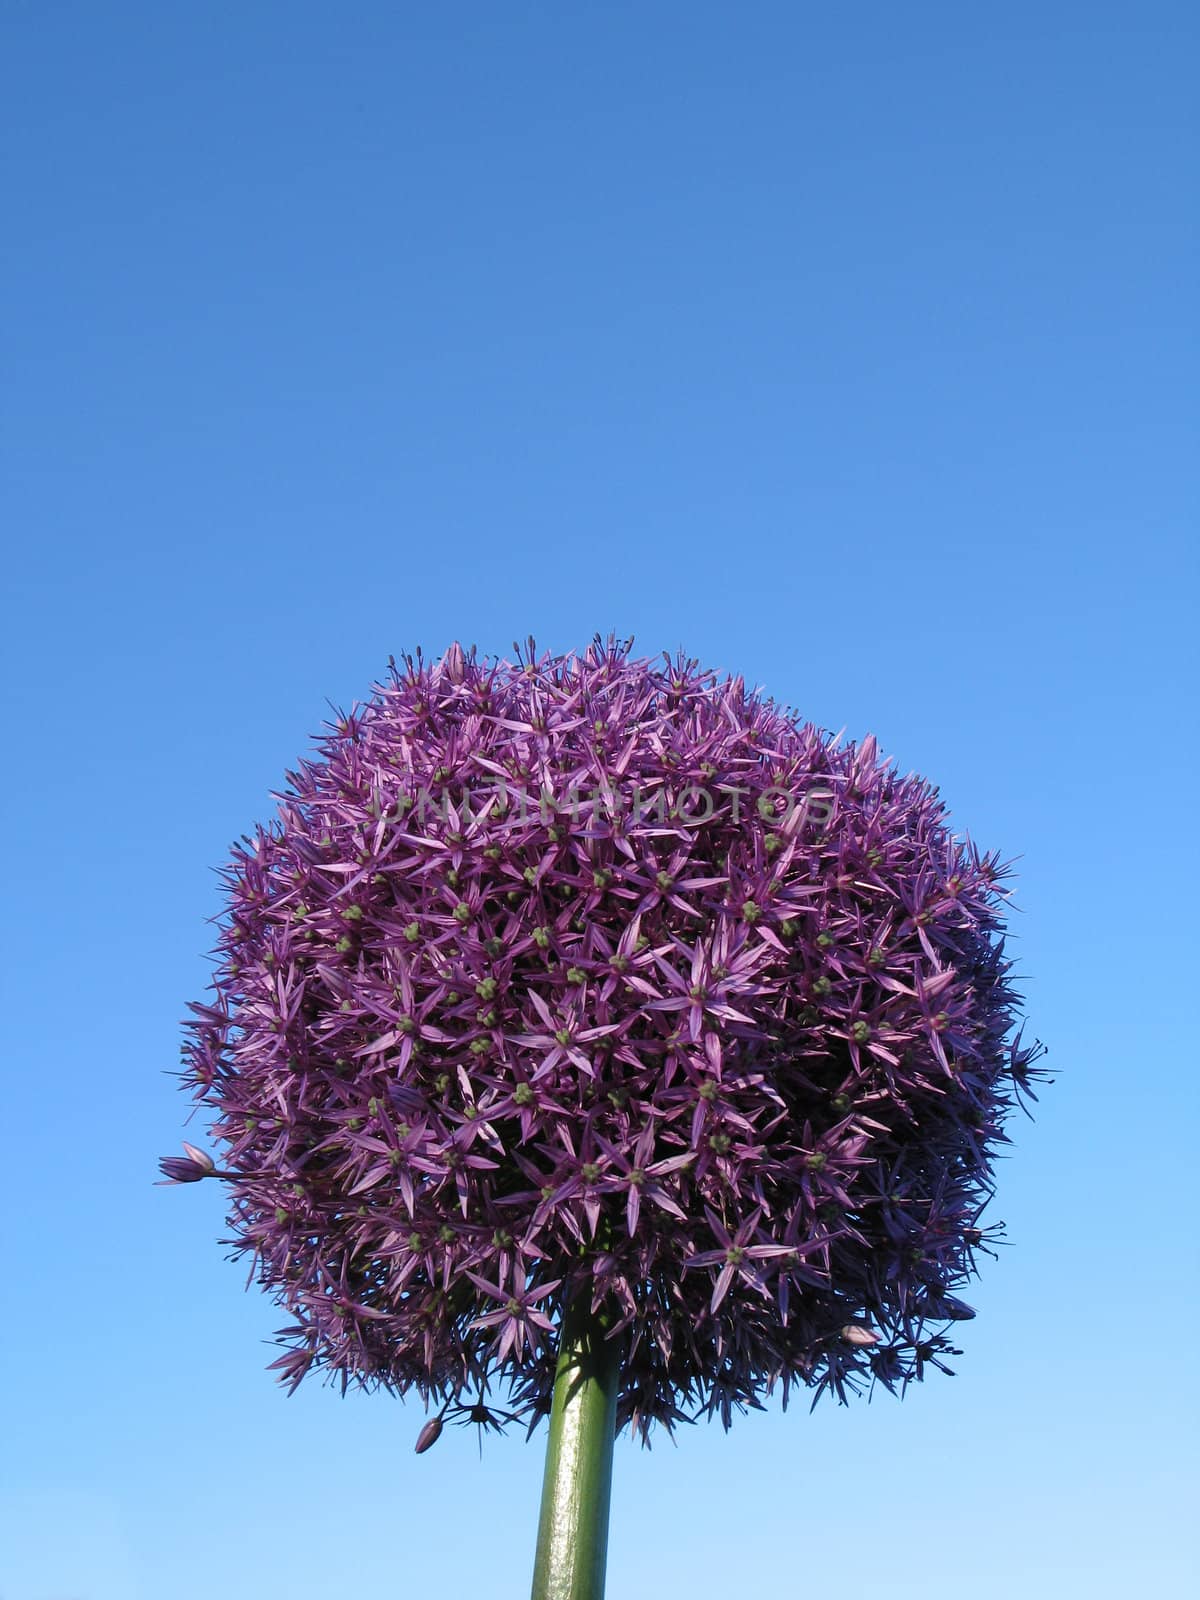 purple round flower in the sky